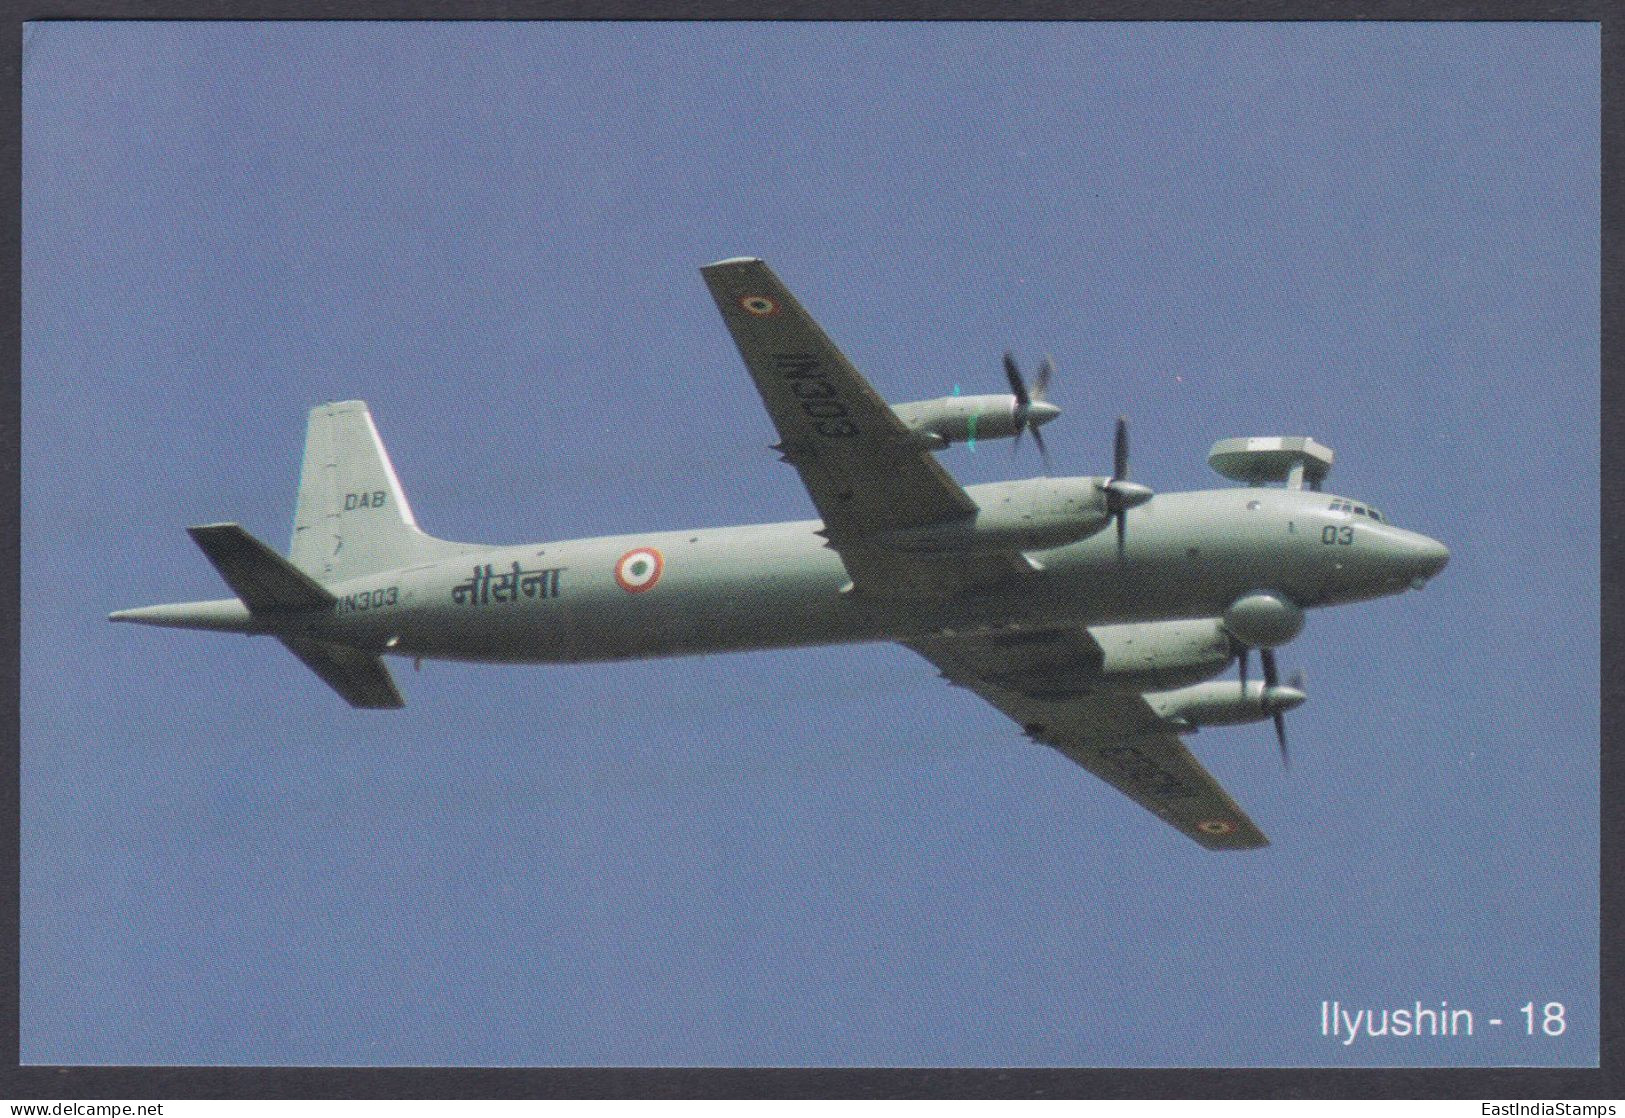 Inde India 2007 Mint Postcard Bangalore Air Show Ilyushin - 18, Indian Navy, Naval, Aircraft, Aeroplane, Airplane - India